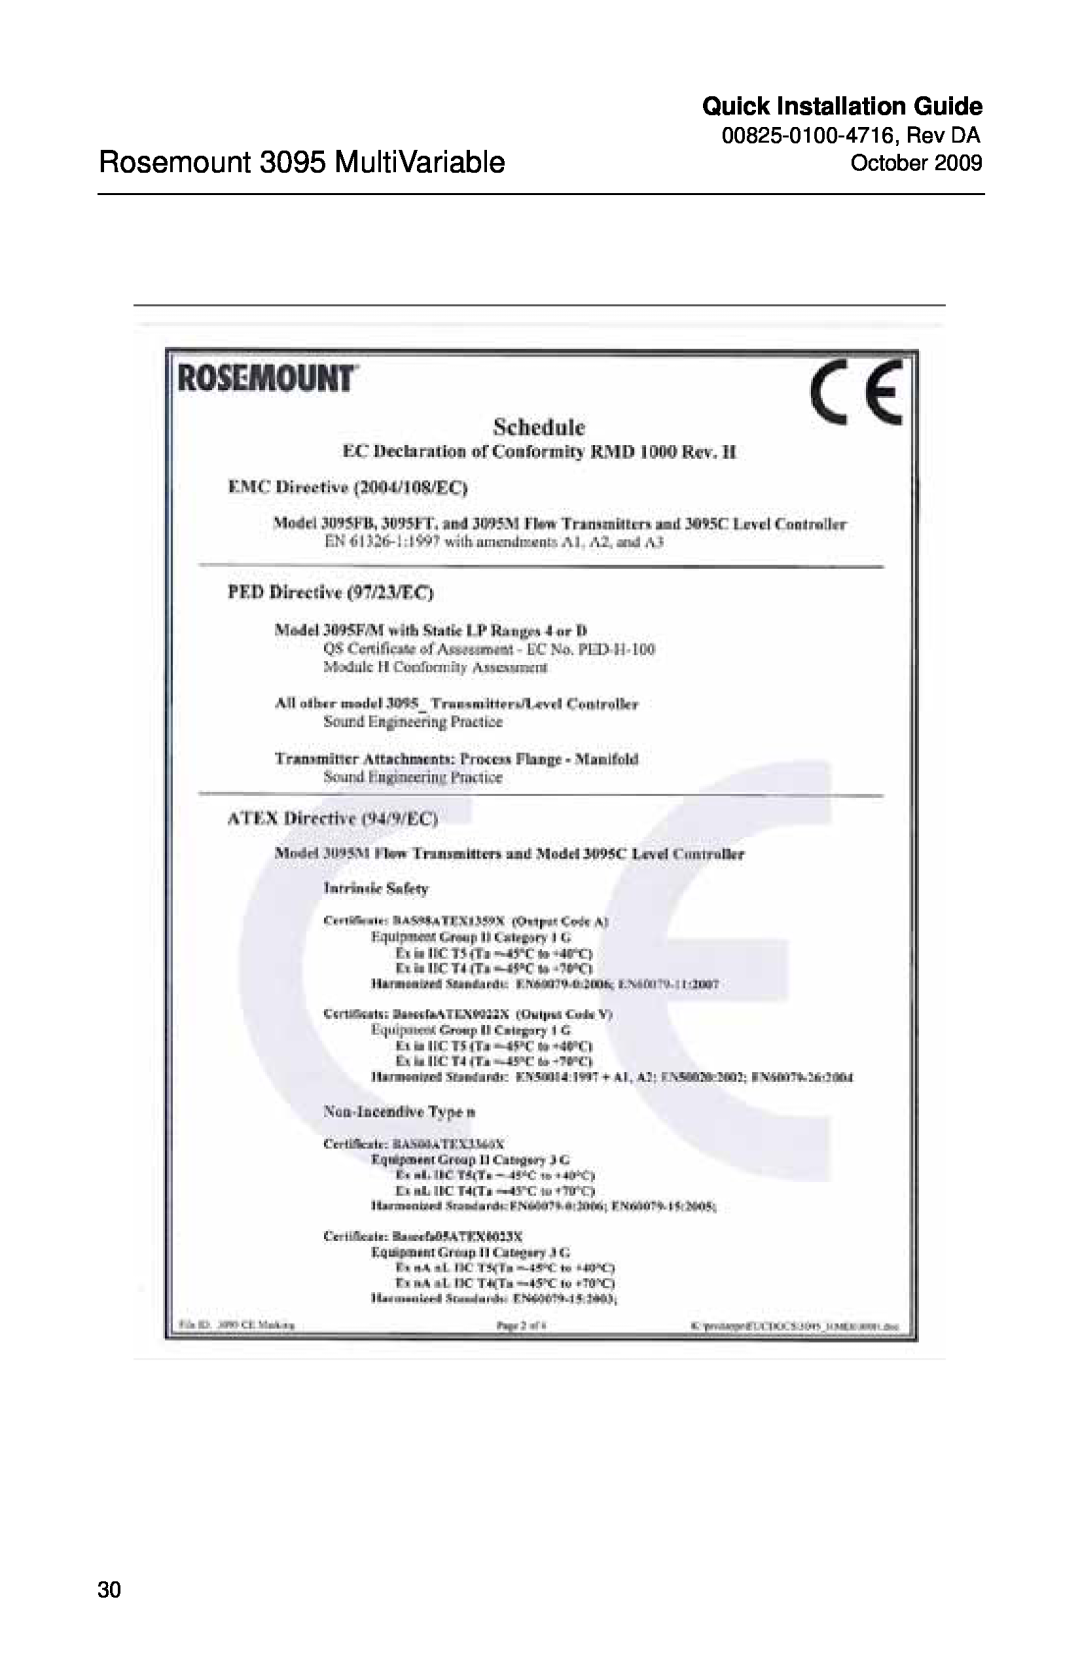 Emerson 00825-0100-4716 manual Rosemount 3095 MultiVariable, Quick Installation Guide 